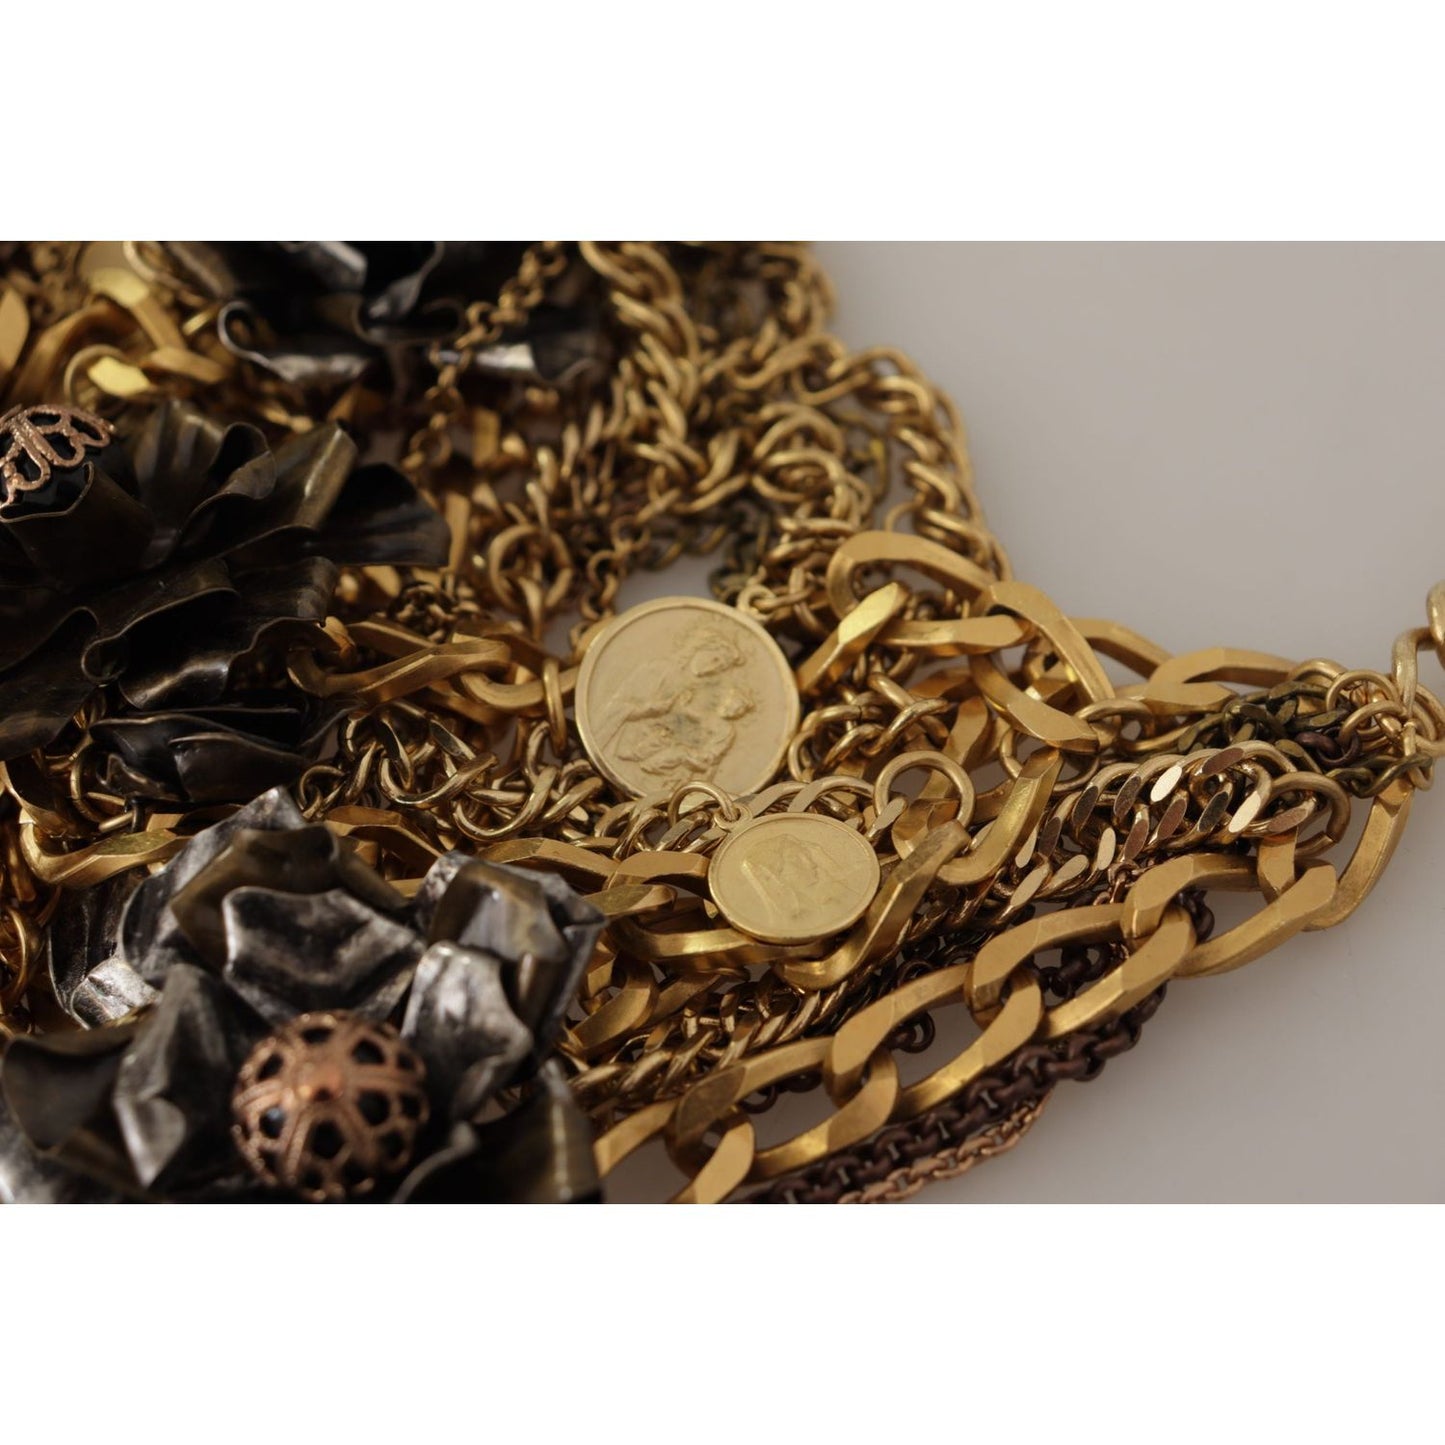 Dolce & Gabbana Sicilian Glamour Gold Statement Necklace WOMAN NECKLACE gold-brass-sicily-charm-heart-statement-necklace